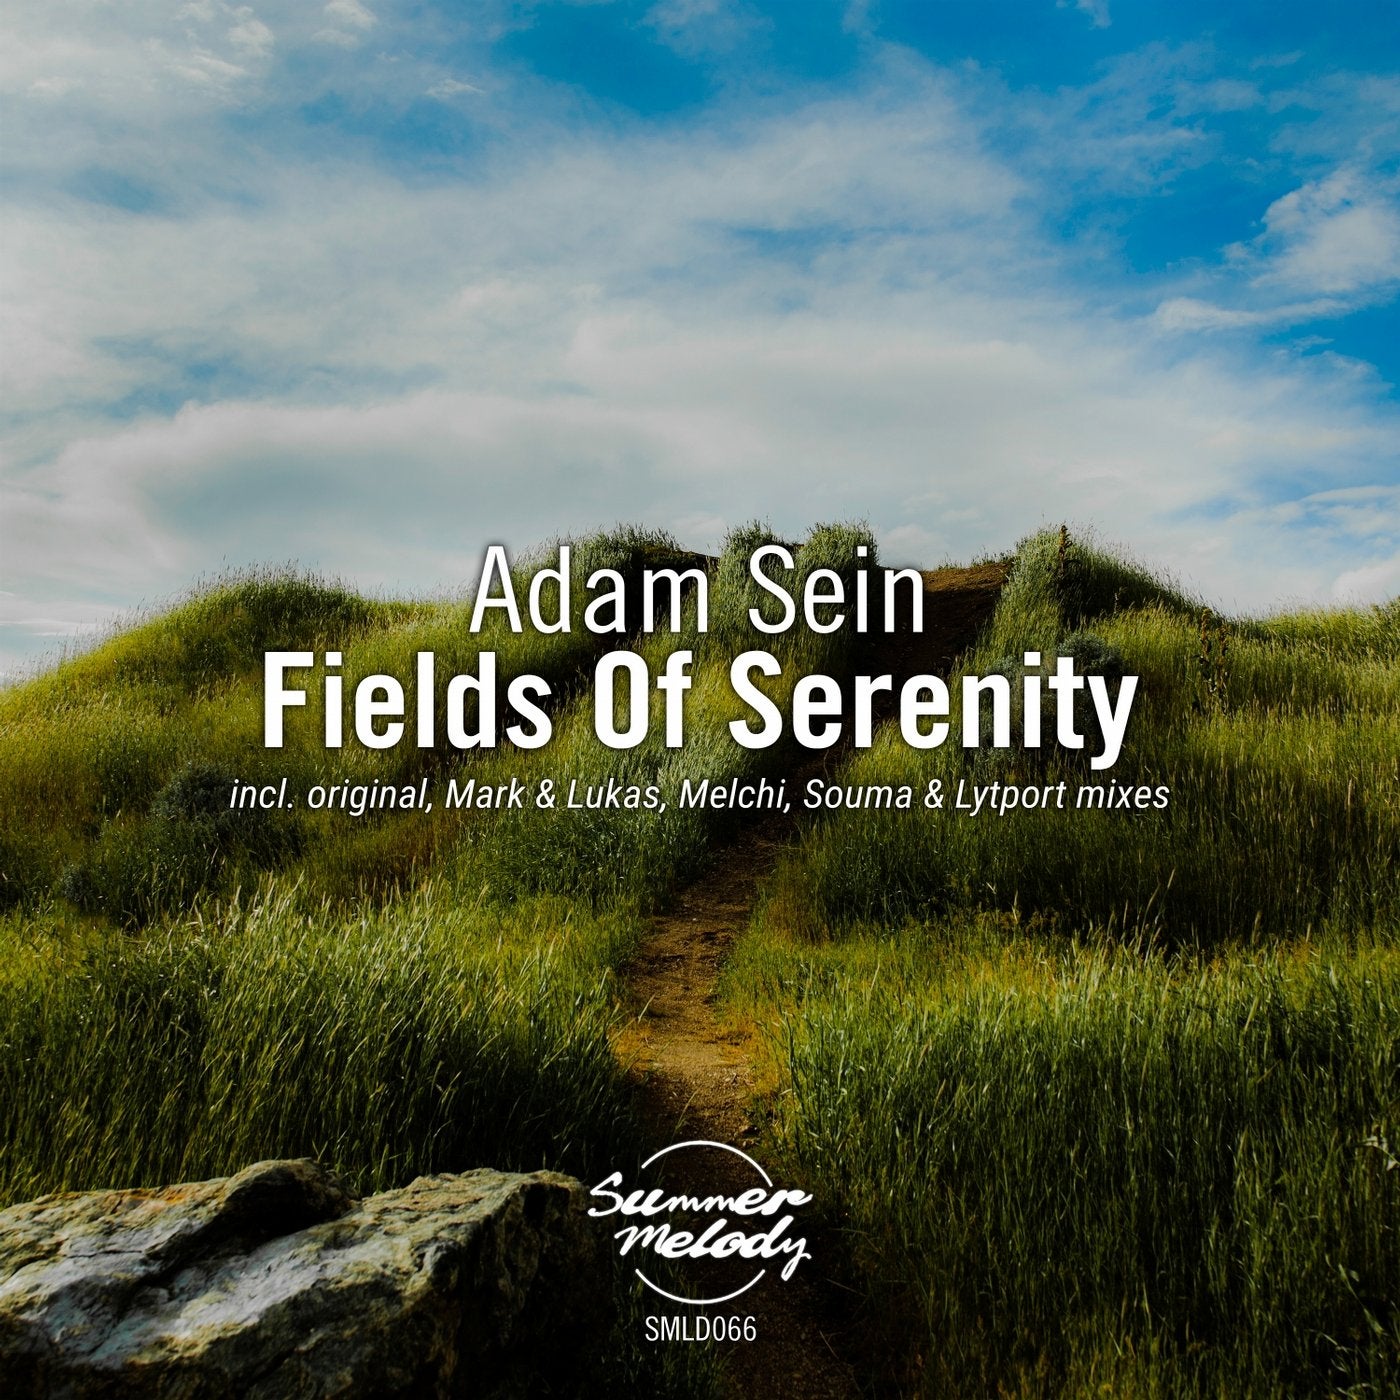 Fields of Serenity